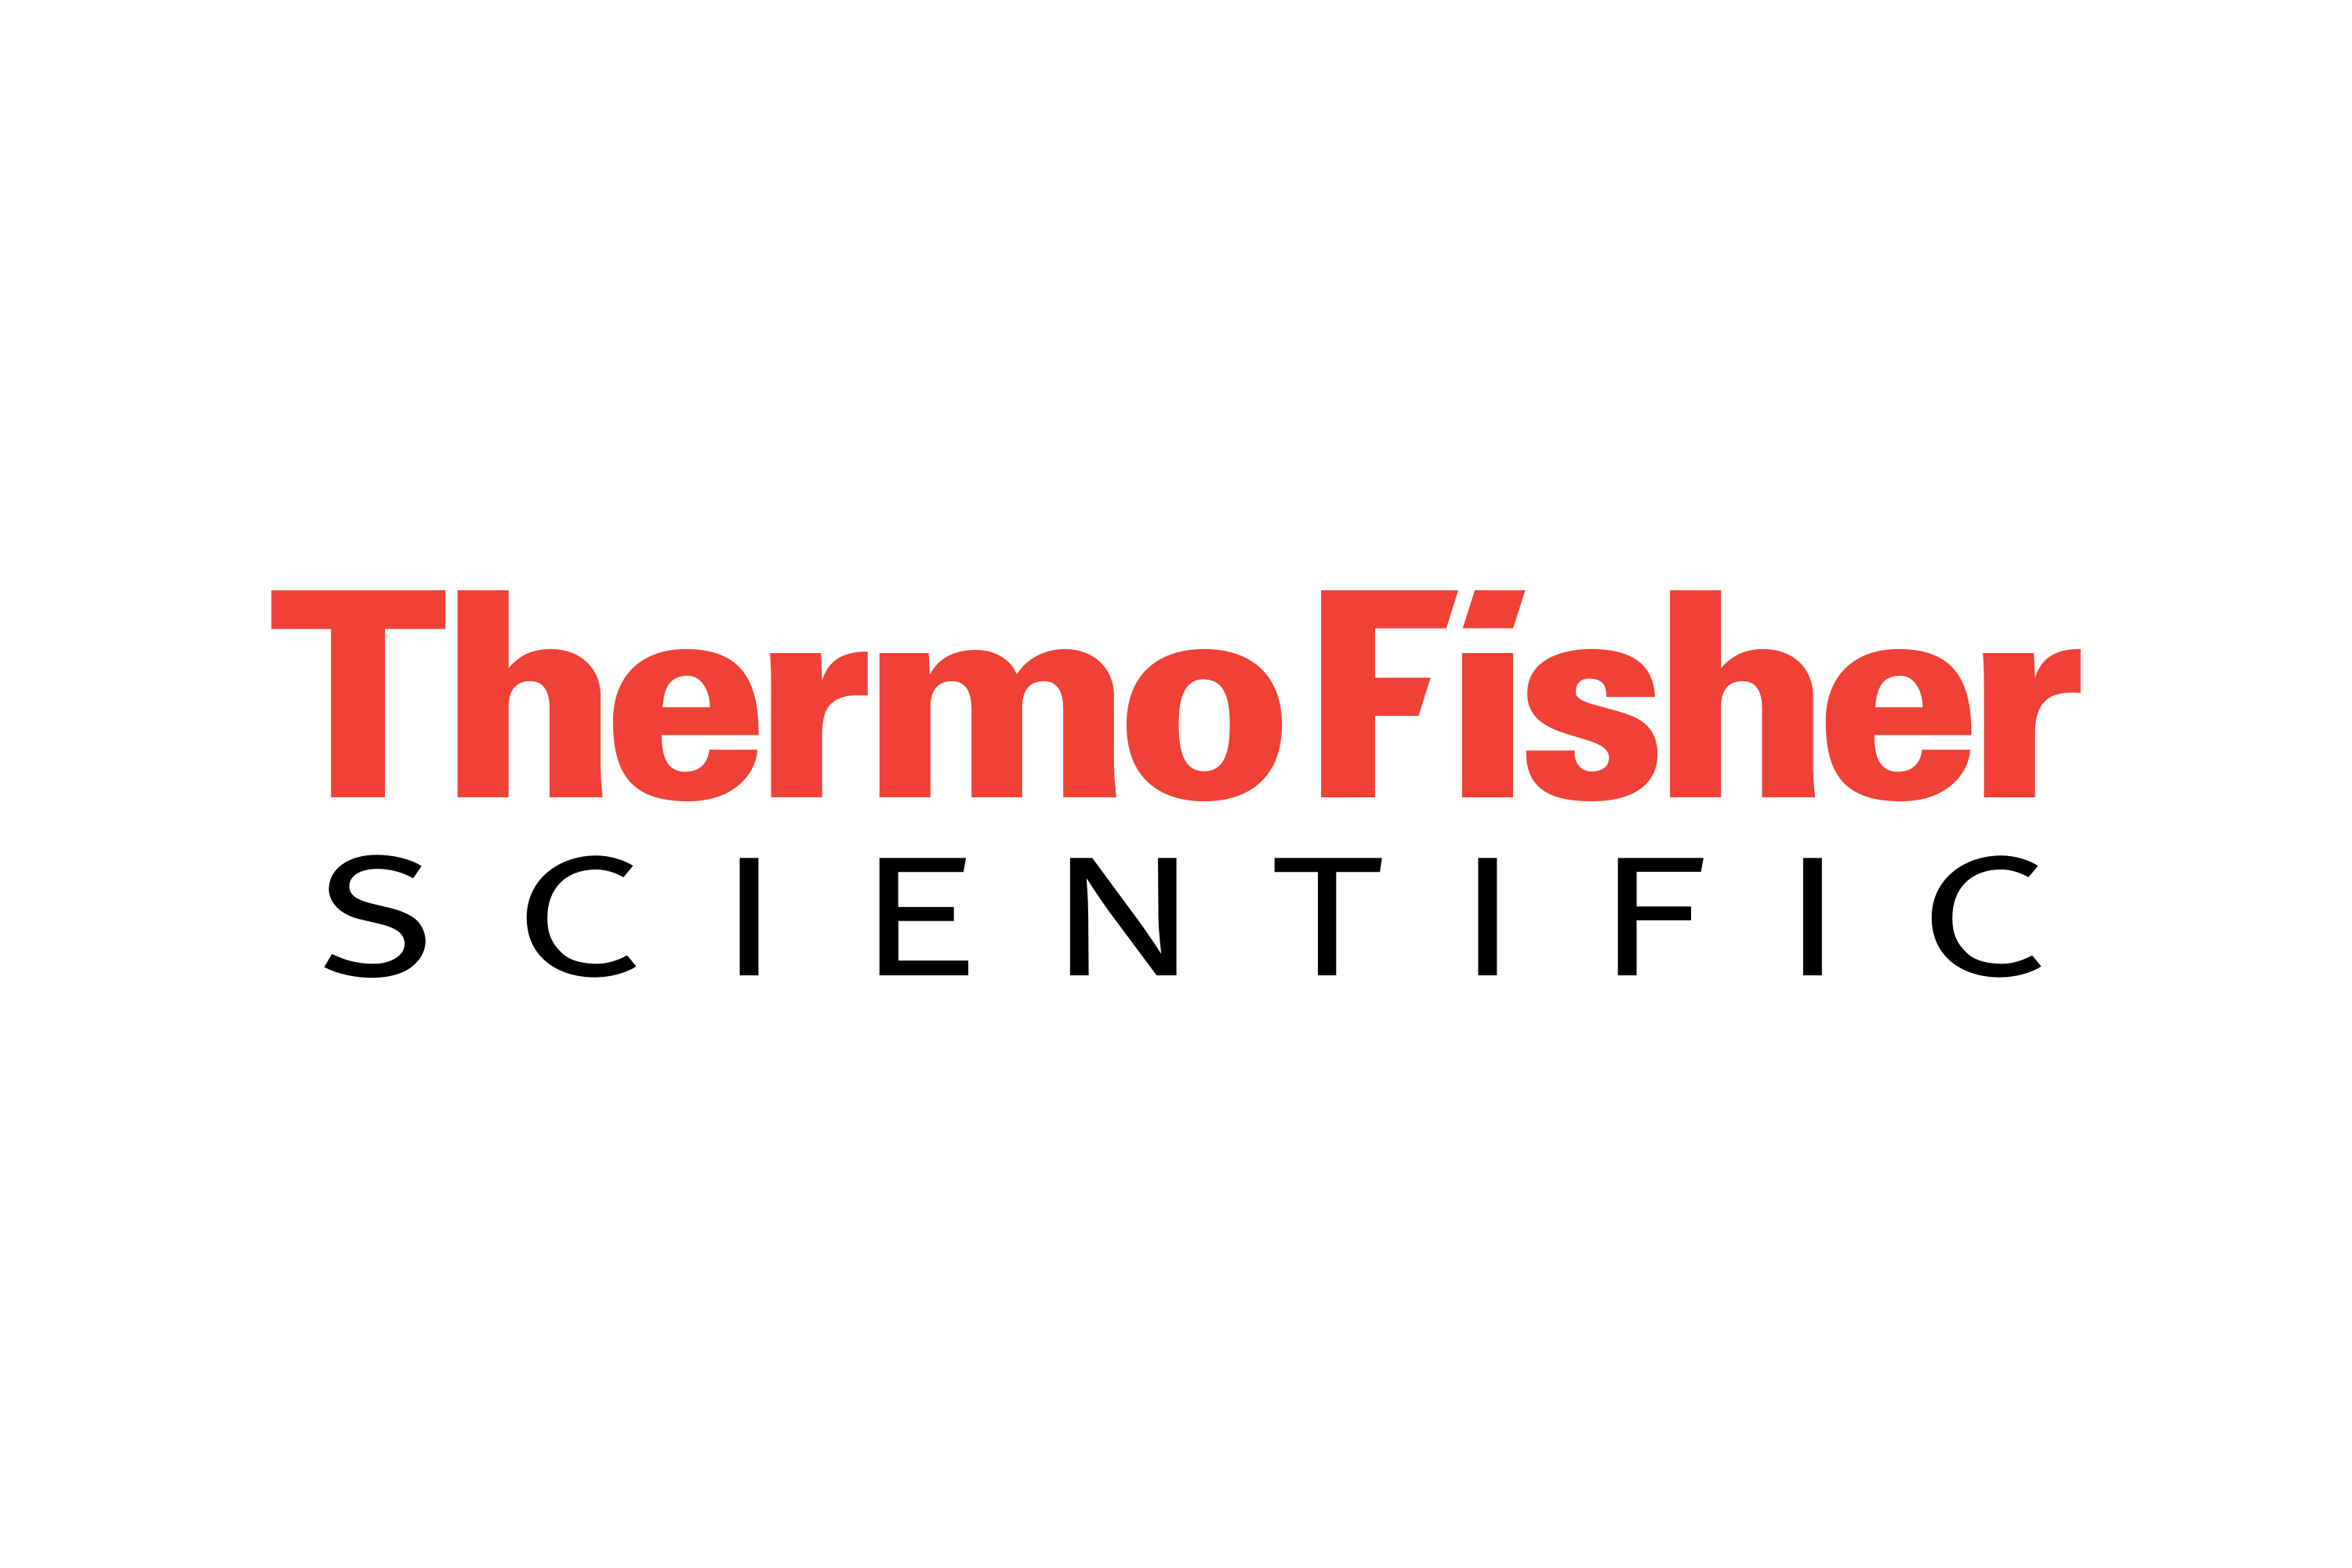 Thermofisher logo